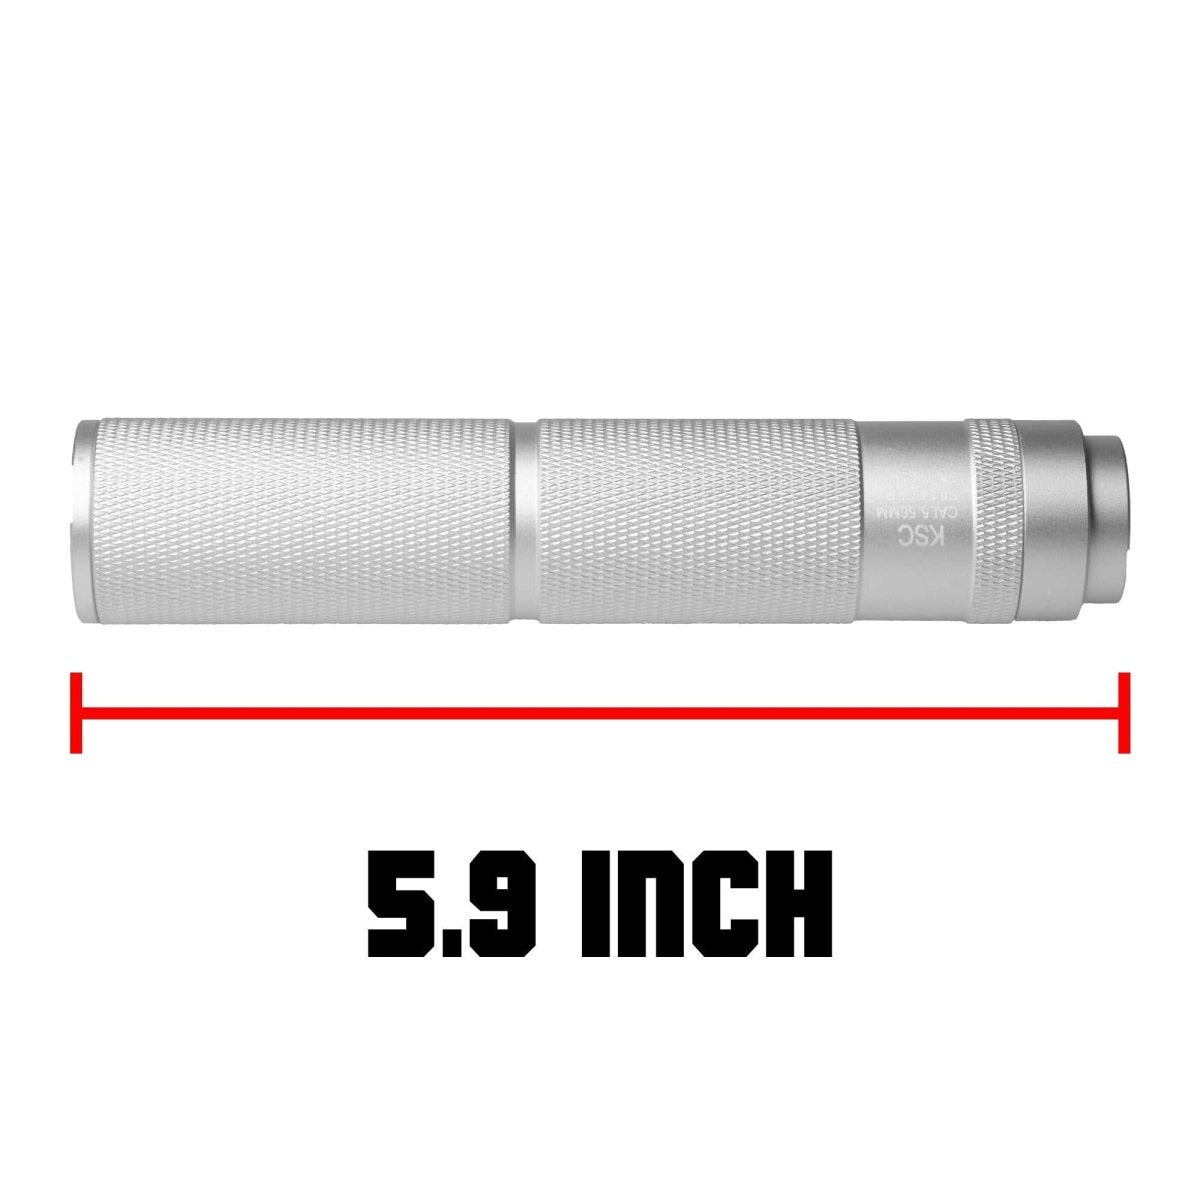 EMERBU Metal KSC Silencer(Sliver) - 14mm CCW - EmerbutoysEmerbutoys